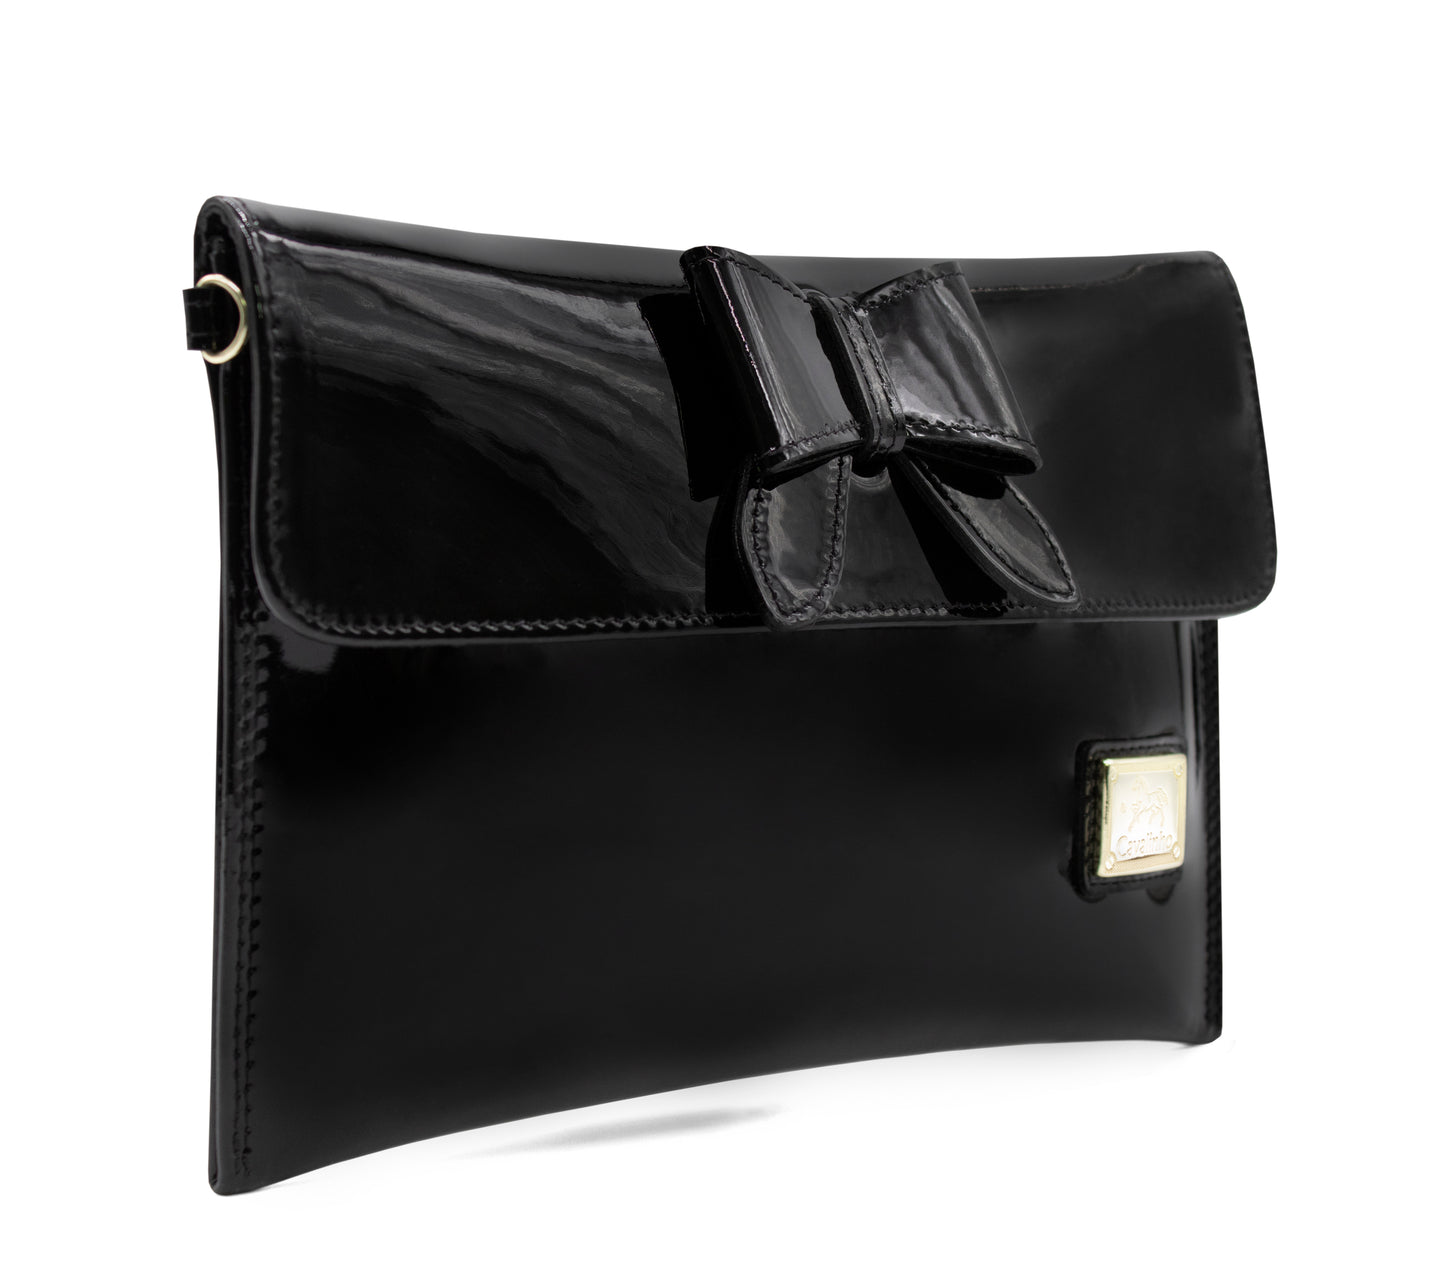 Cavalinho Patent Leather Clutch Bag - Black - 18090068.01_2